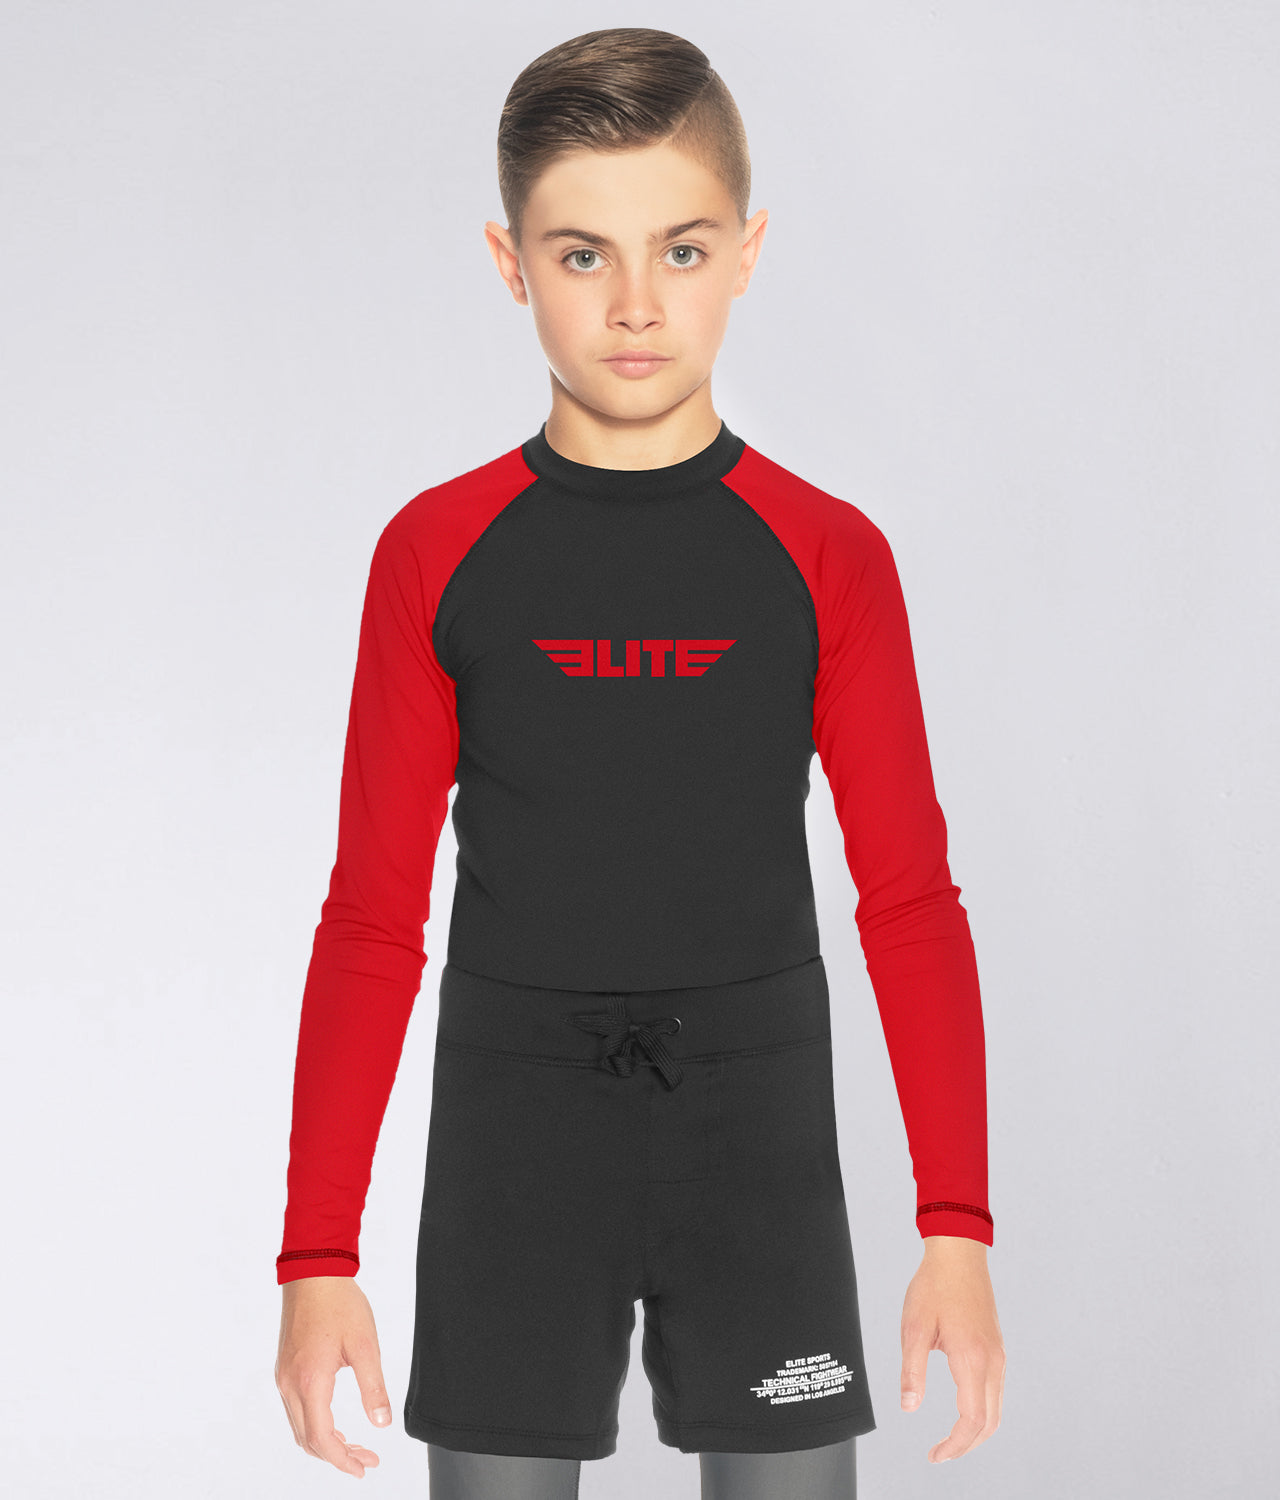 Elite Sports Kids' Standard Red Long Sleeve Wrestling Rash Guard